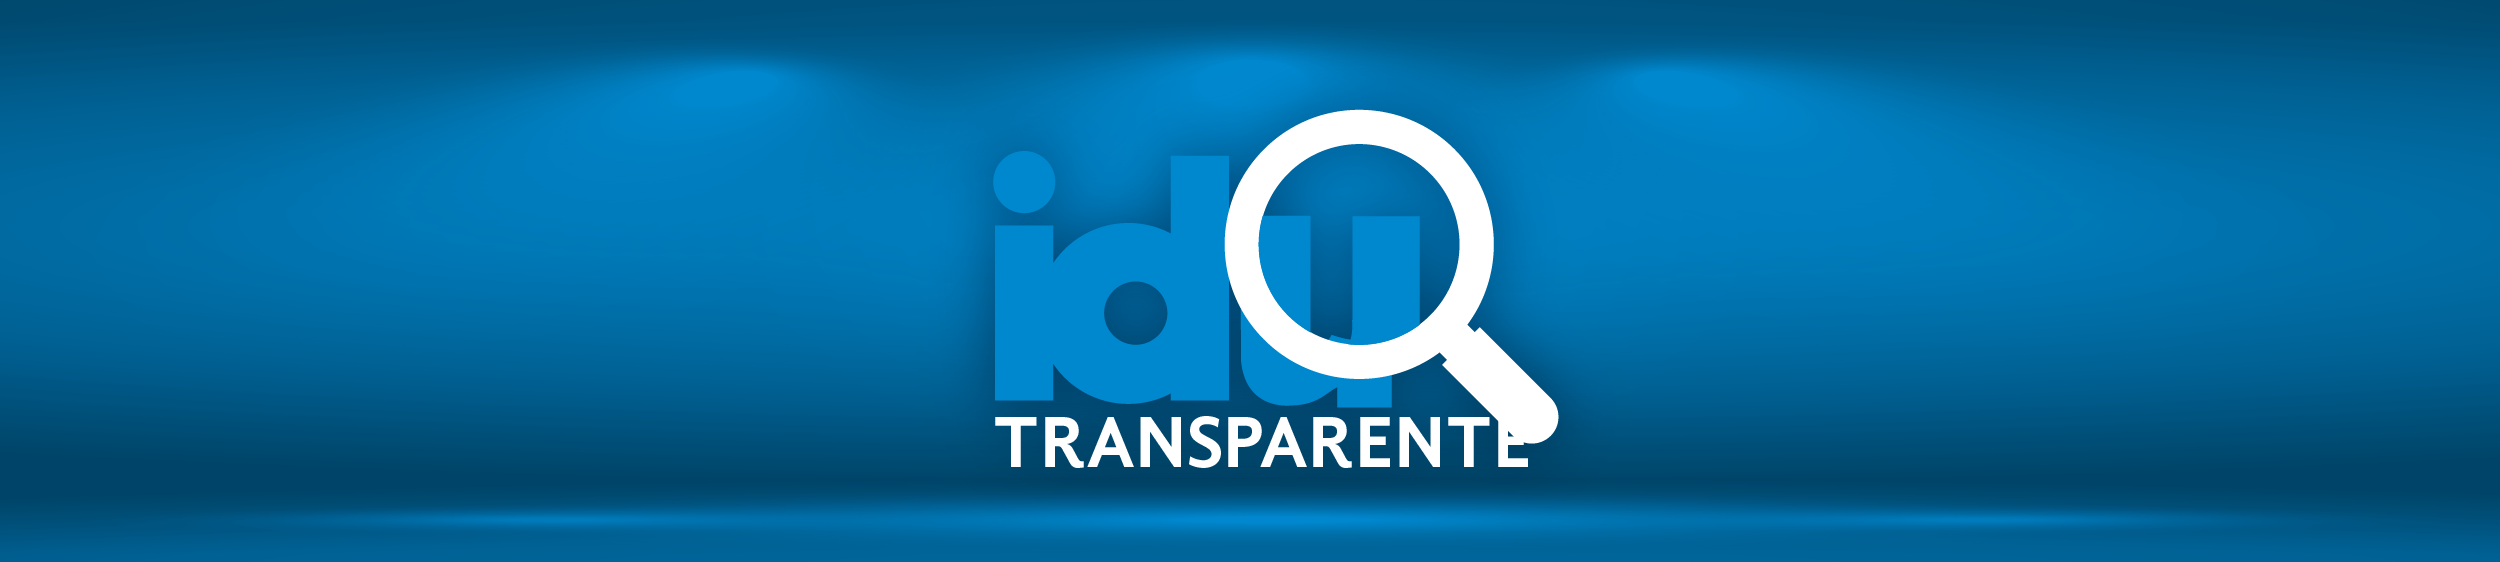 Idu Transparente